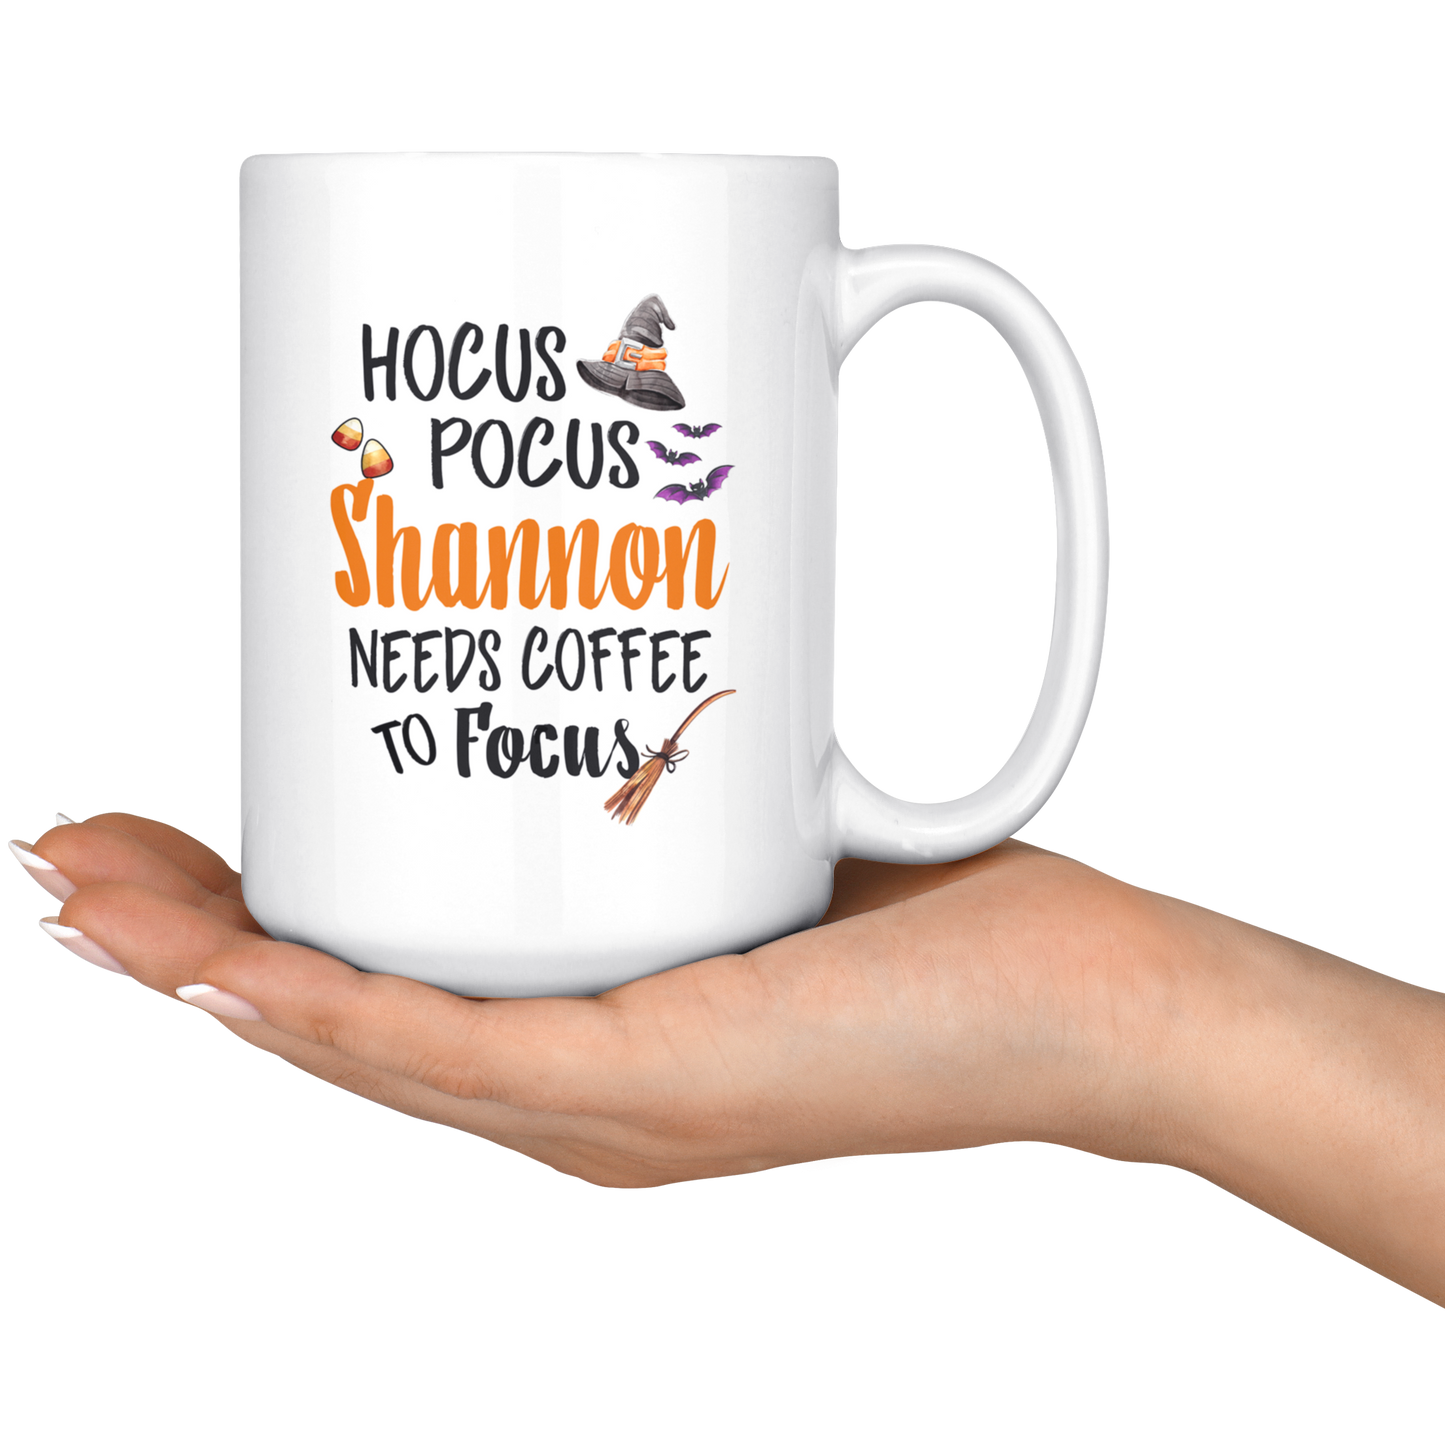 ND-20837472-sp-17076 - Hocus Pocus Shannon Needs Coffee To Focus - Halloween Coffe